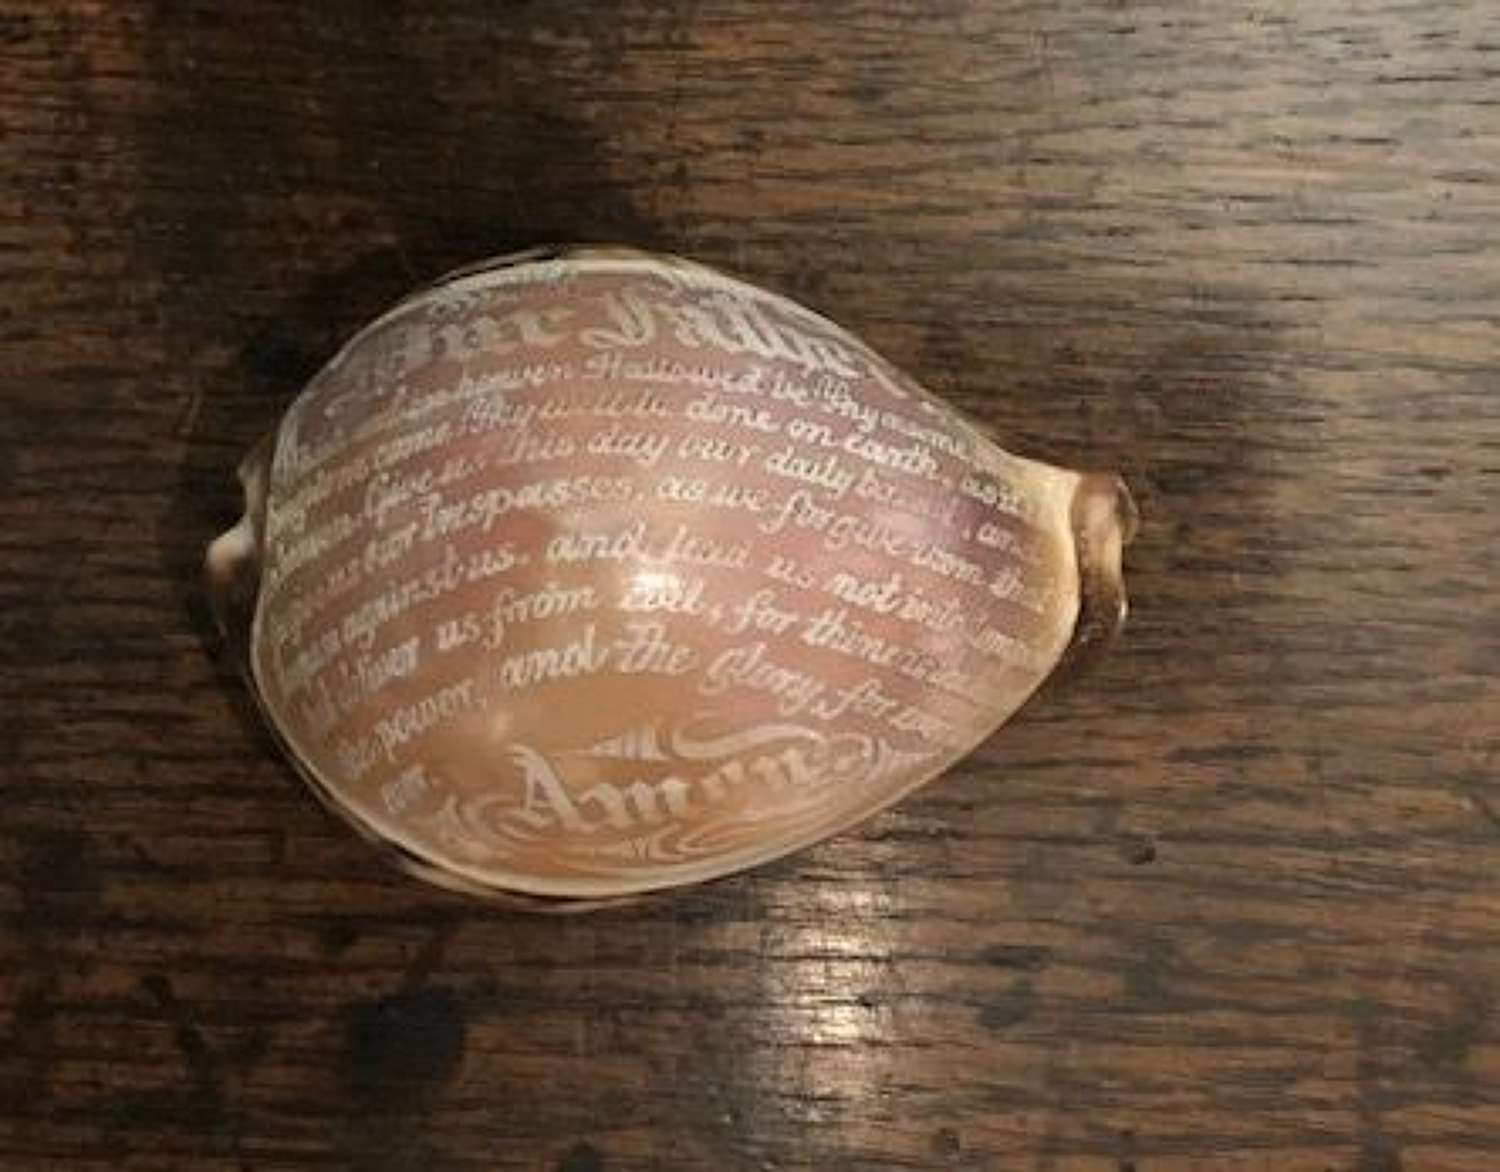 19th century 'scrimshaw' conch shell - 'Lord's Prayer'